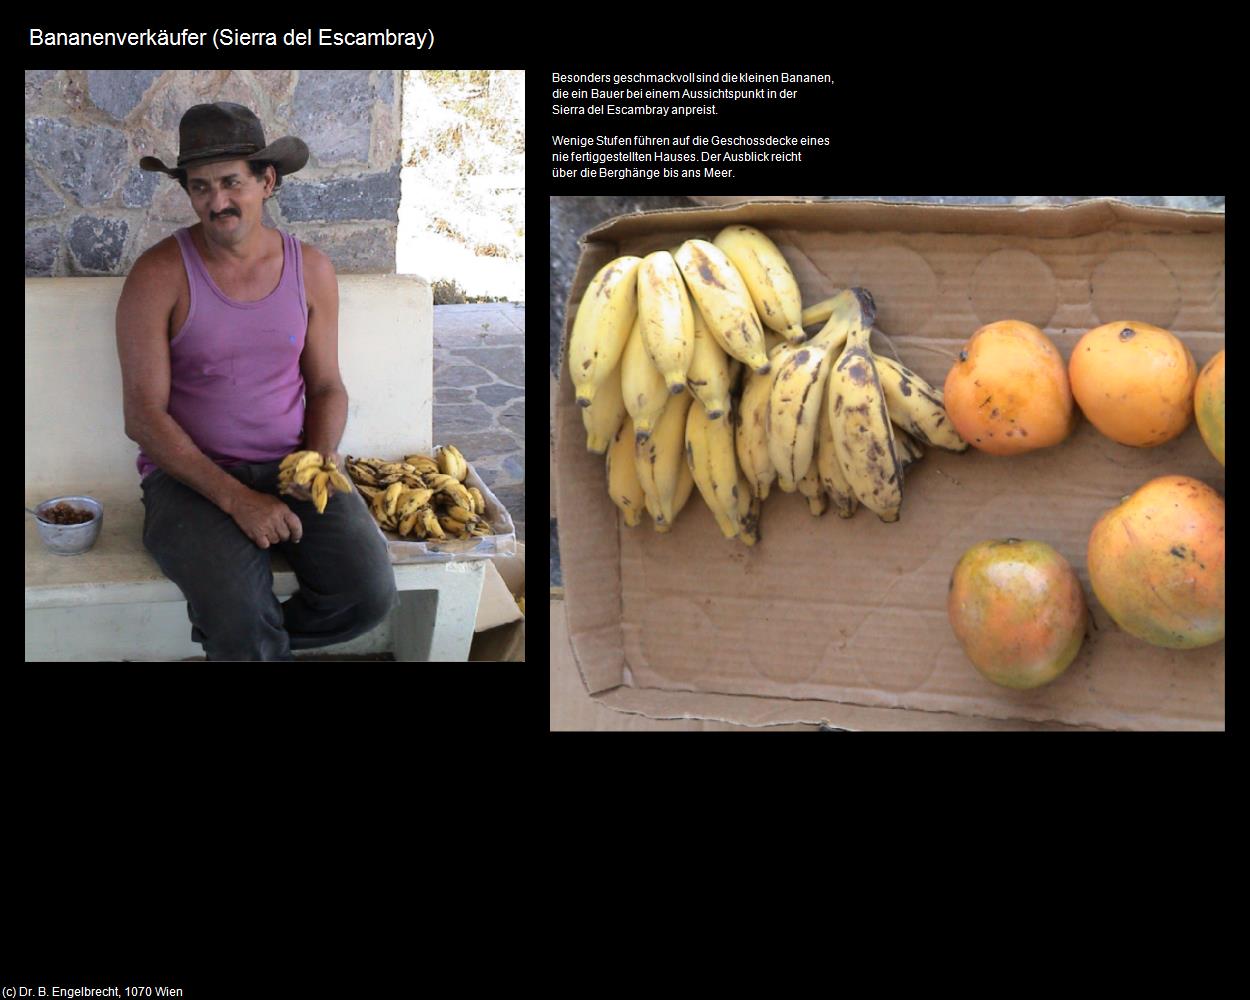 Bananenverkäufer (Sierra del Escambray) in KUBA